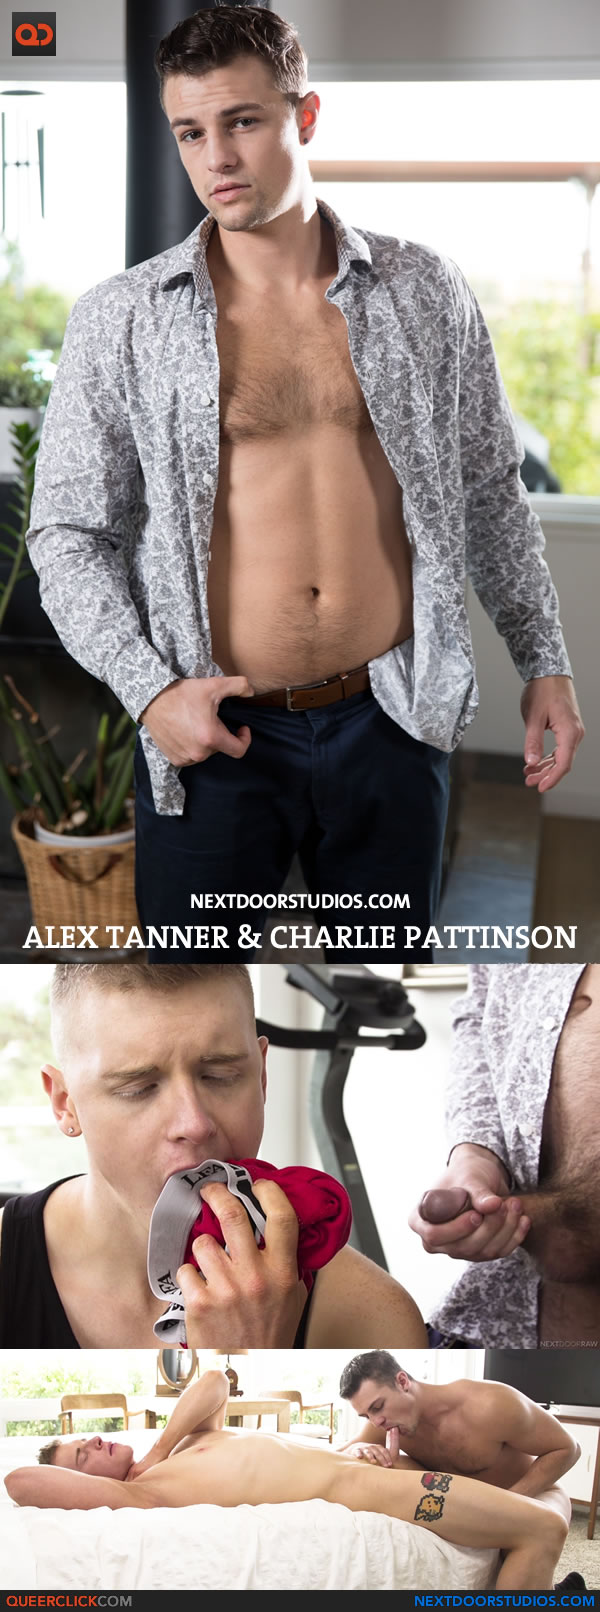 Next Door Studios: Alex Tanner and Charlie Pattinson